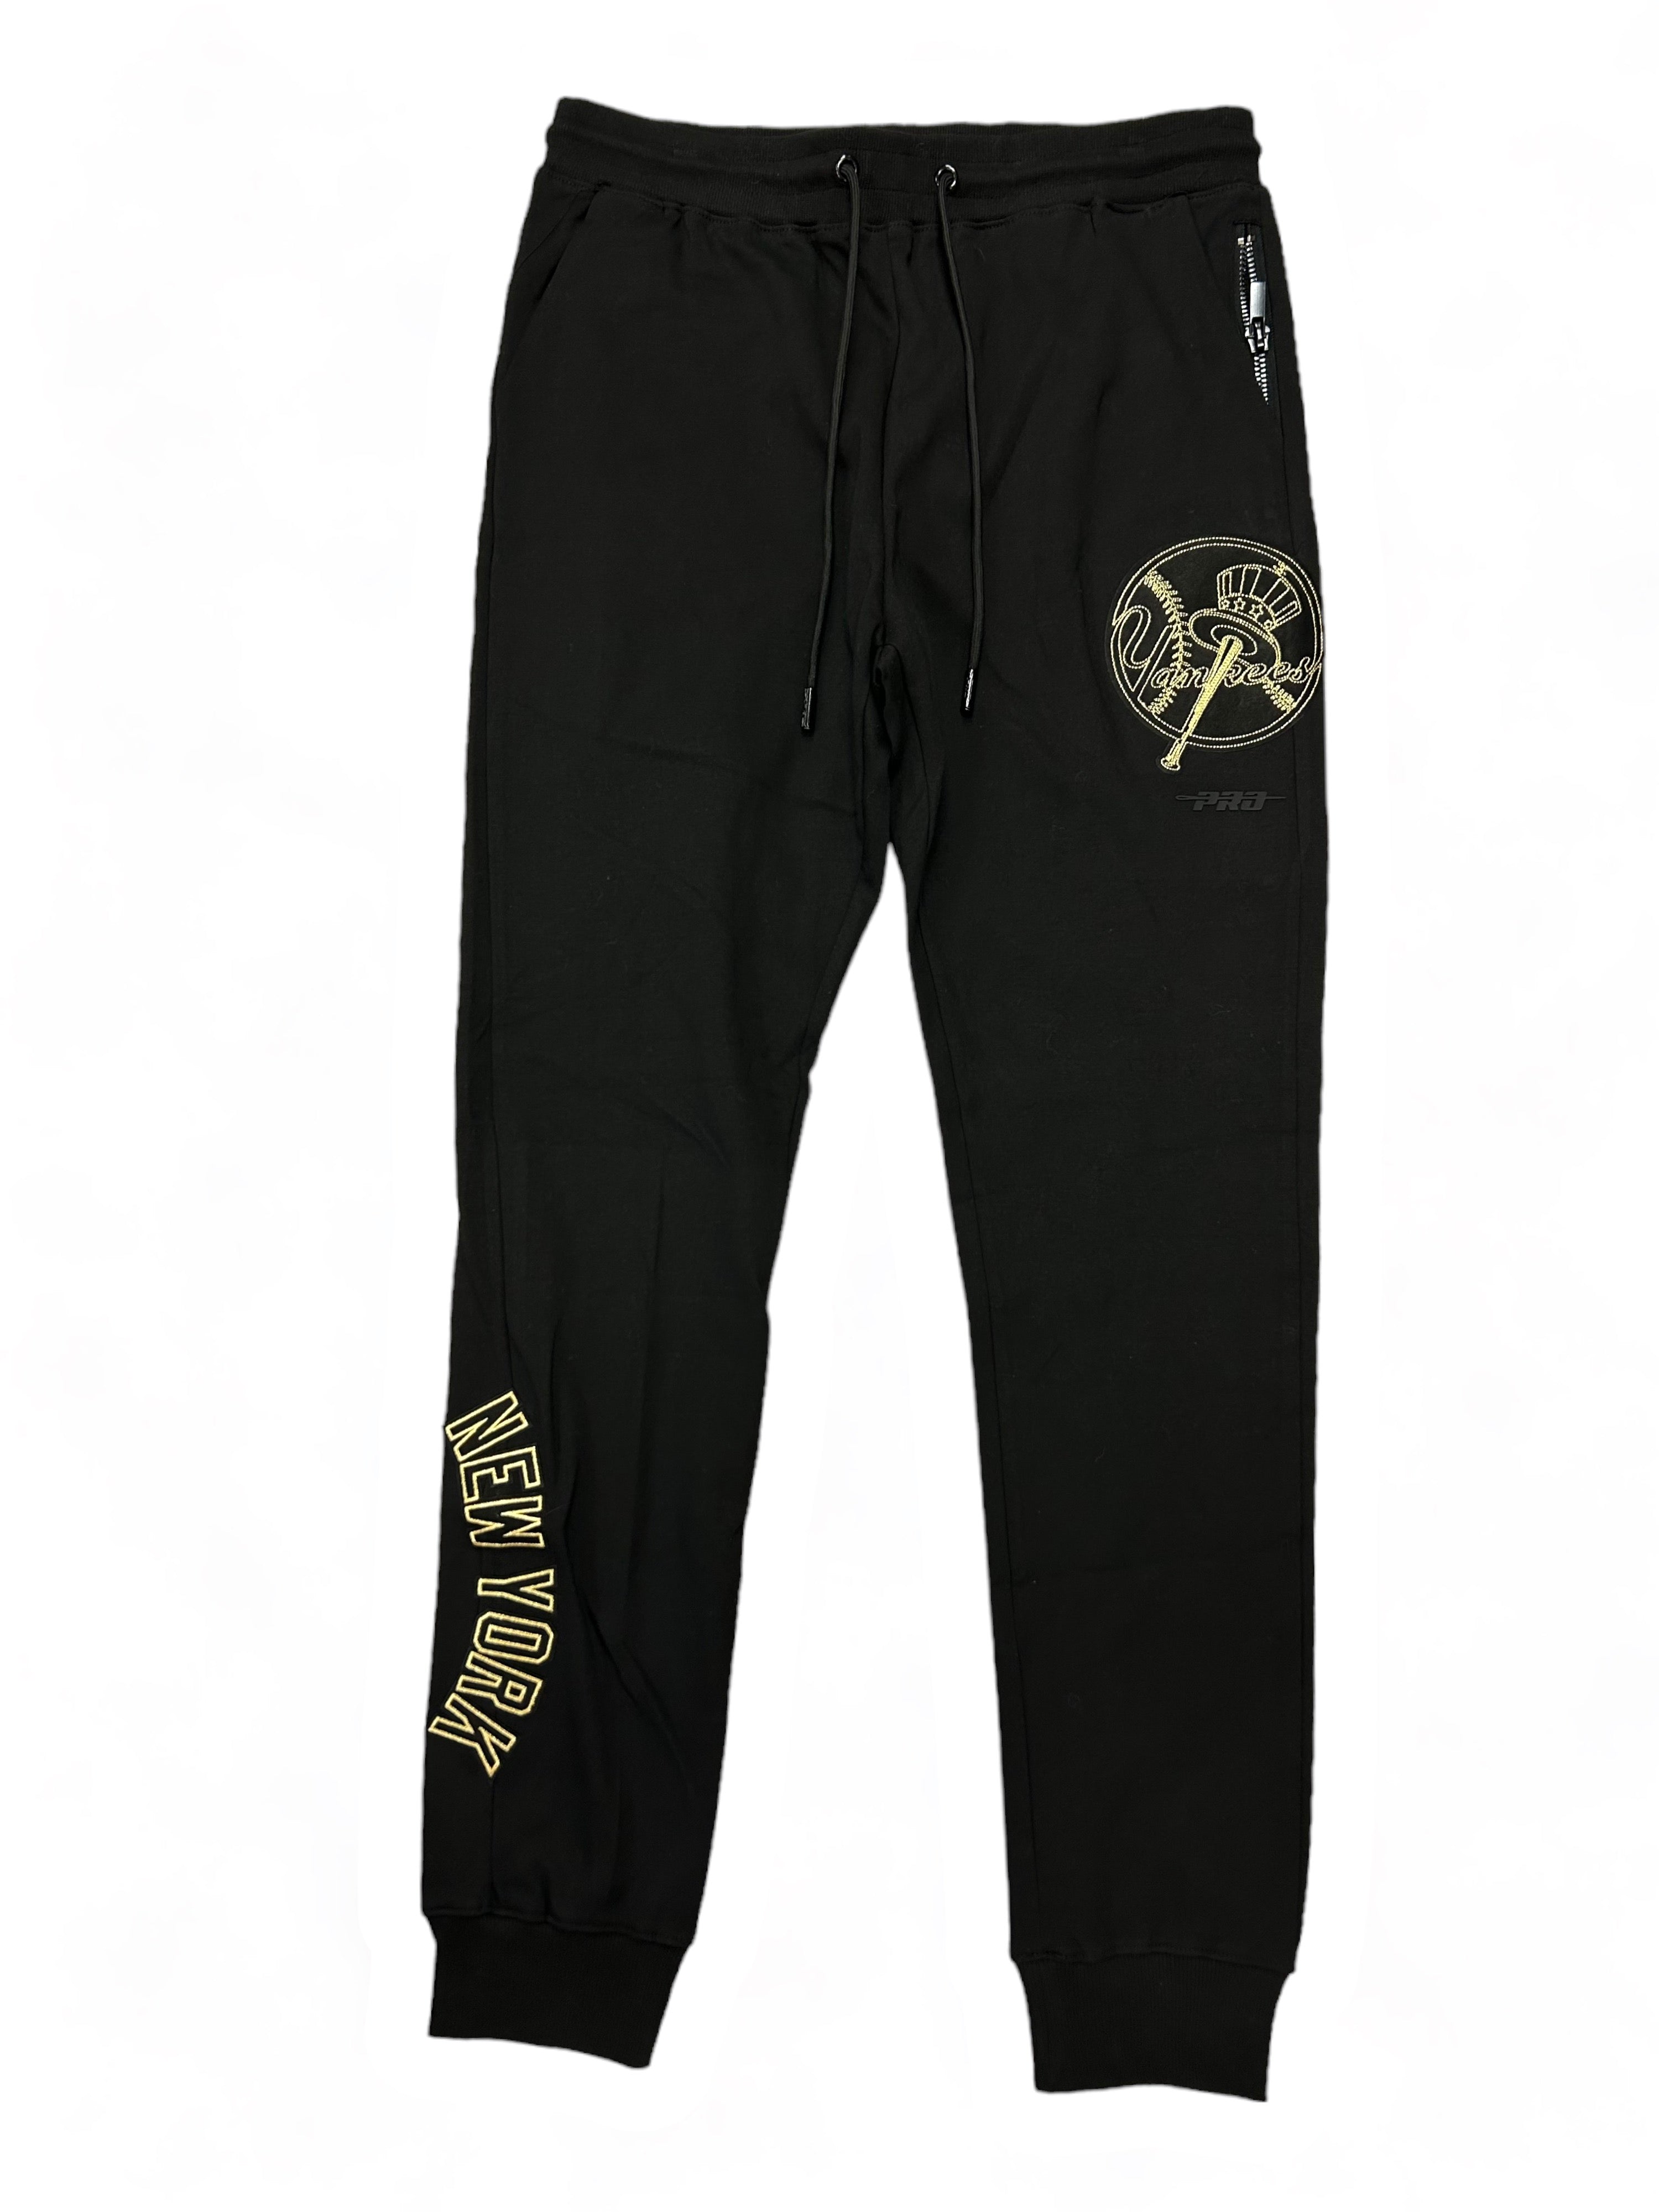 Pro Standard New York Yankees Sweatsuit (Black/Gold)